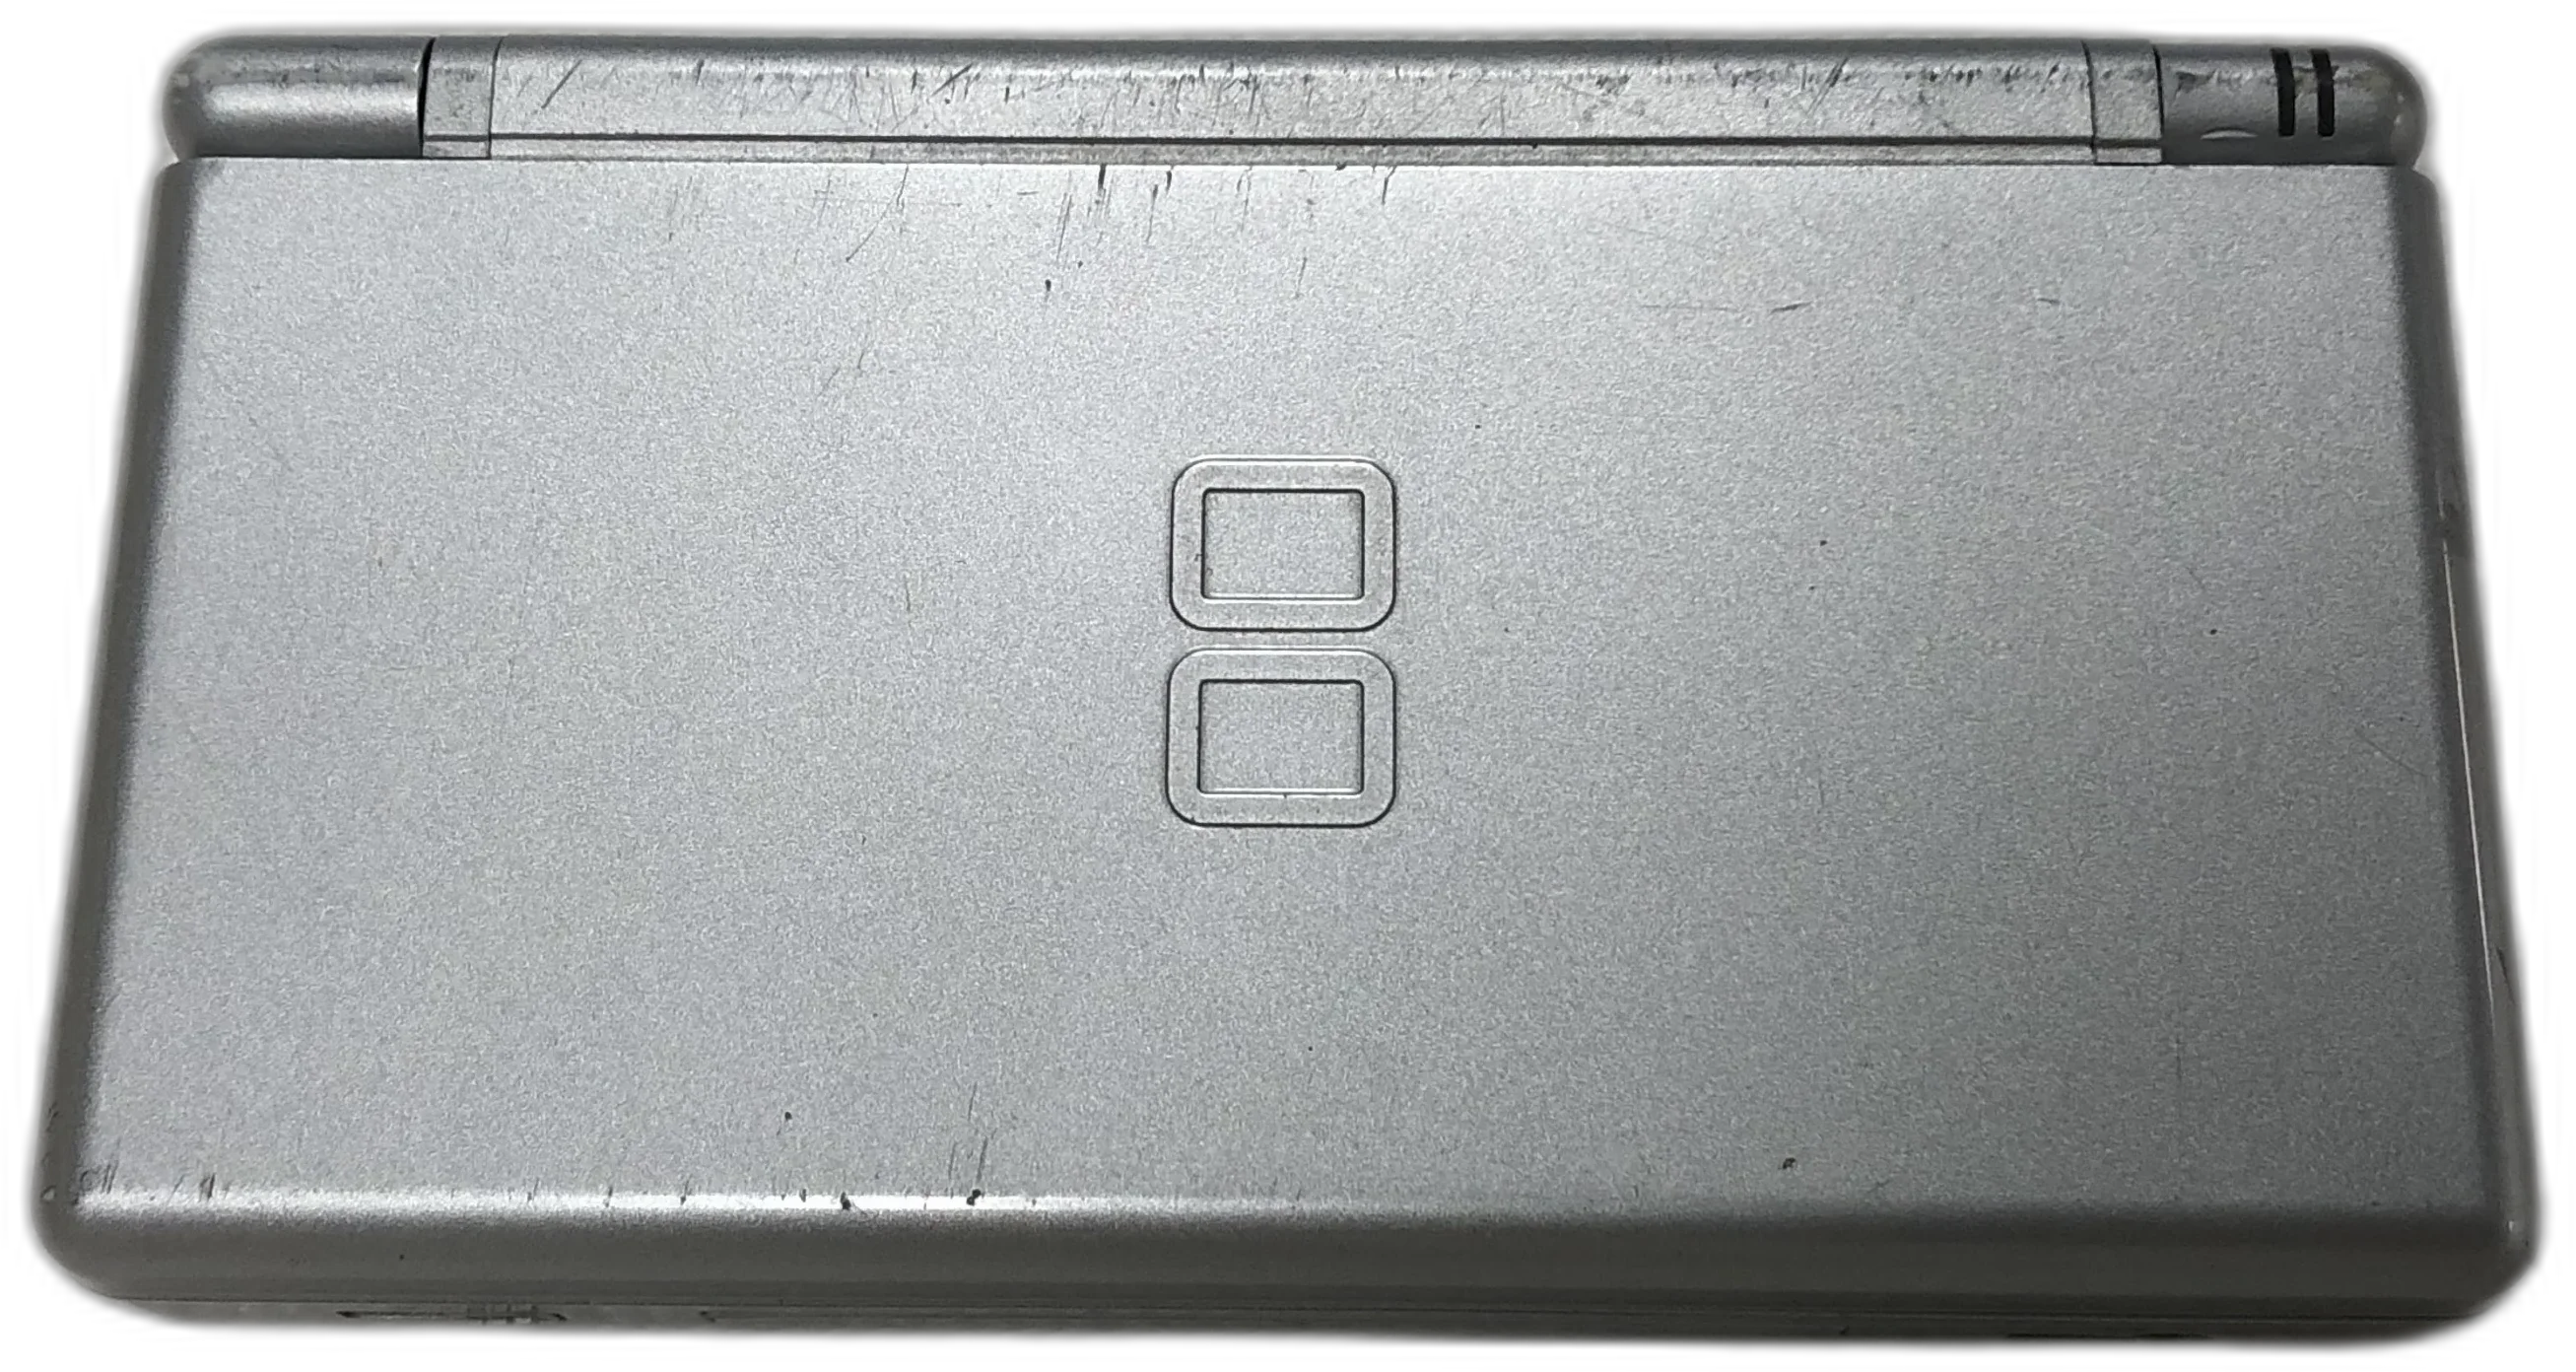  Nintendo DS Lite Silver Console [KOR]